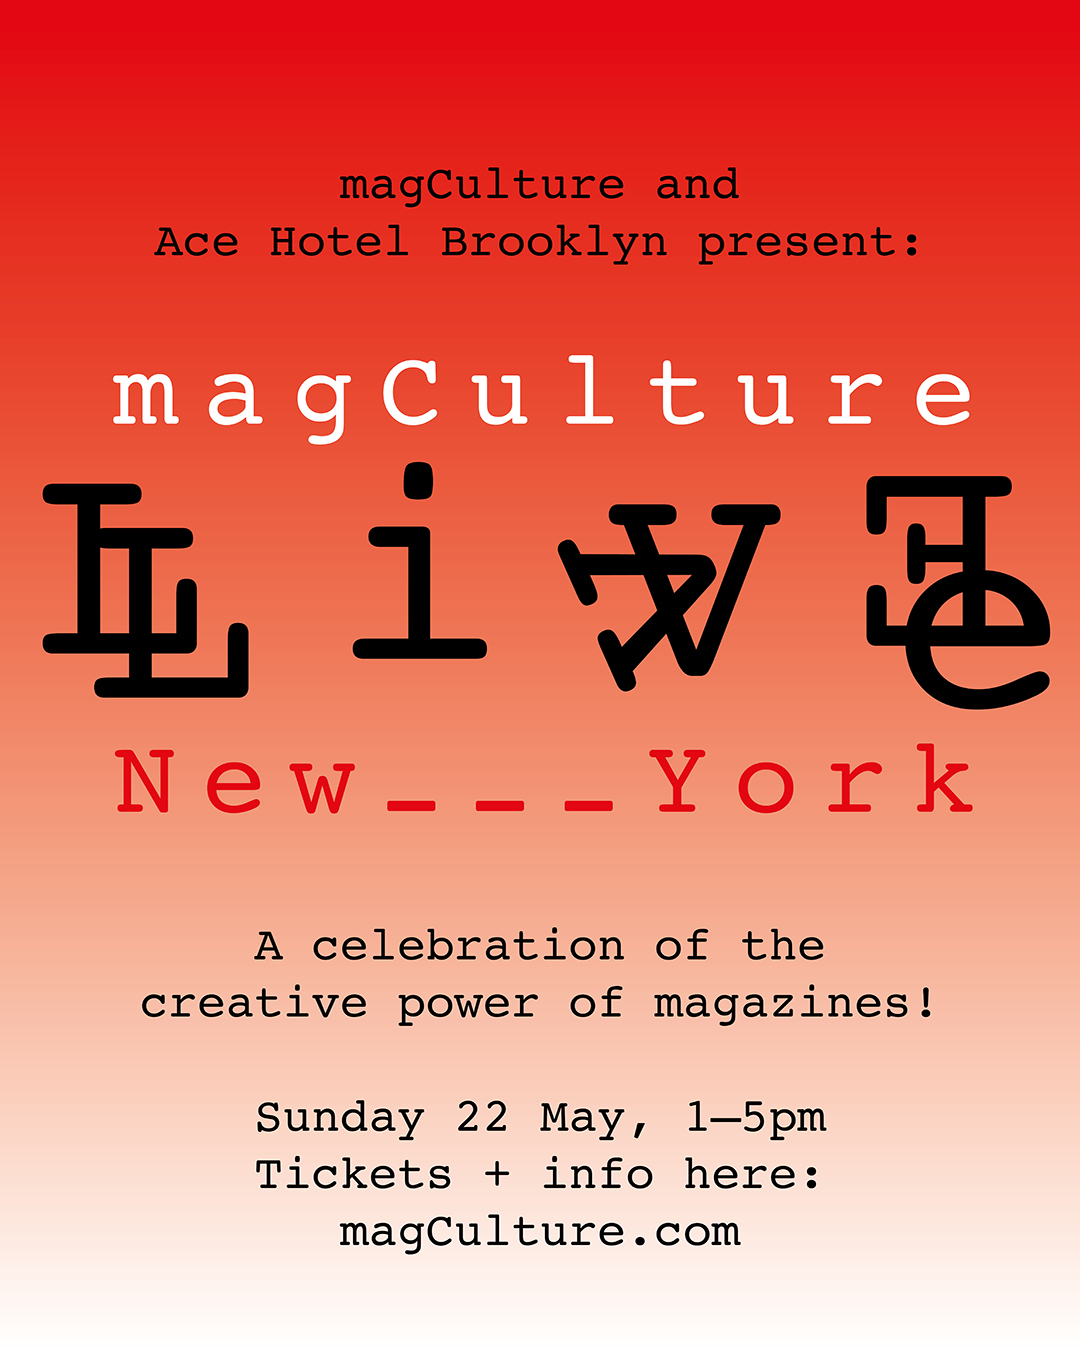 magCulture event flyer